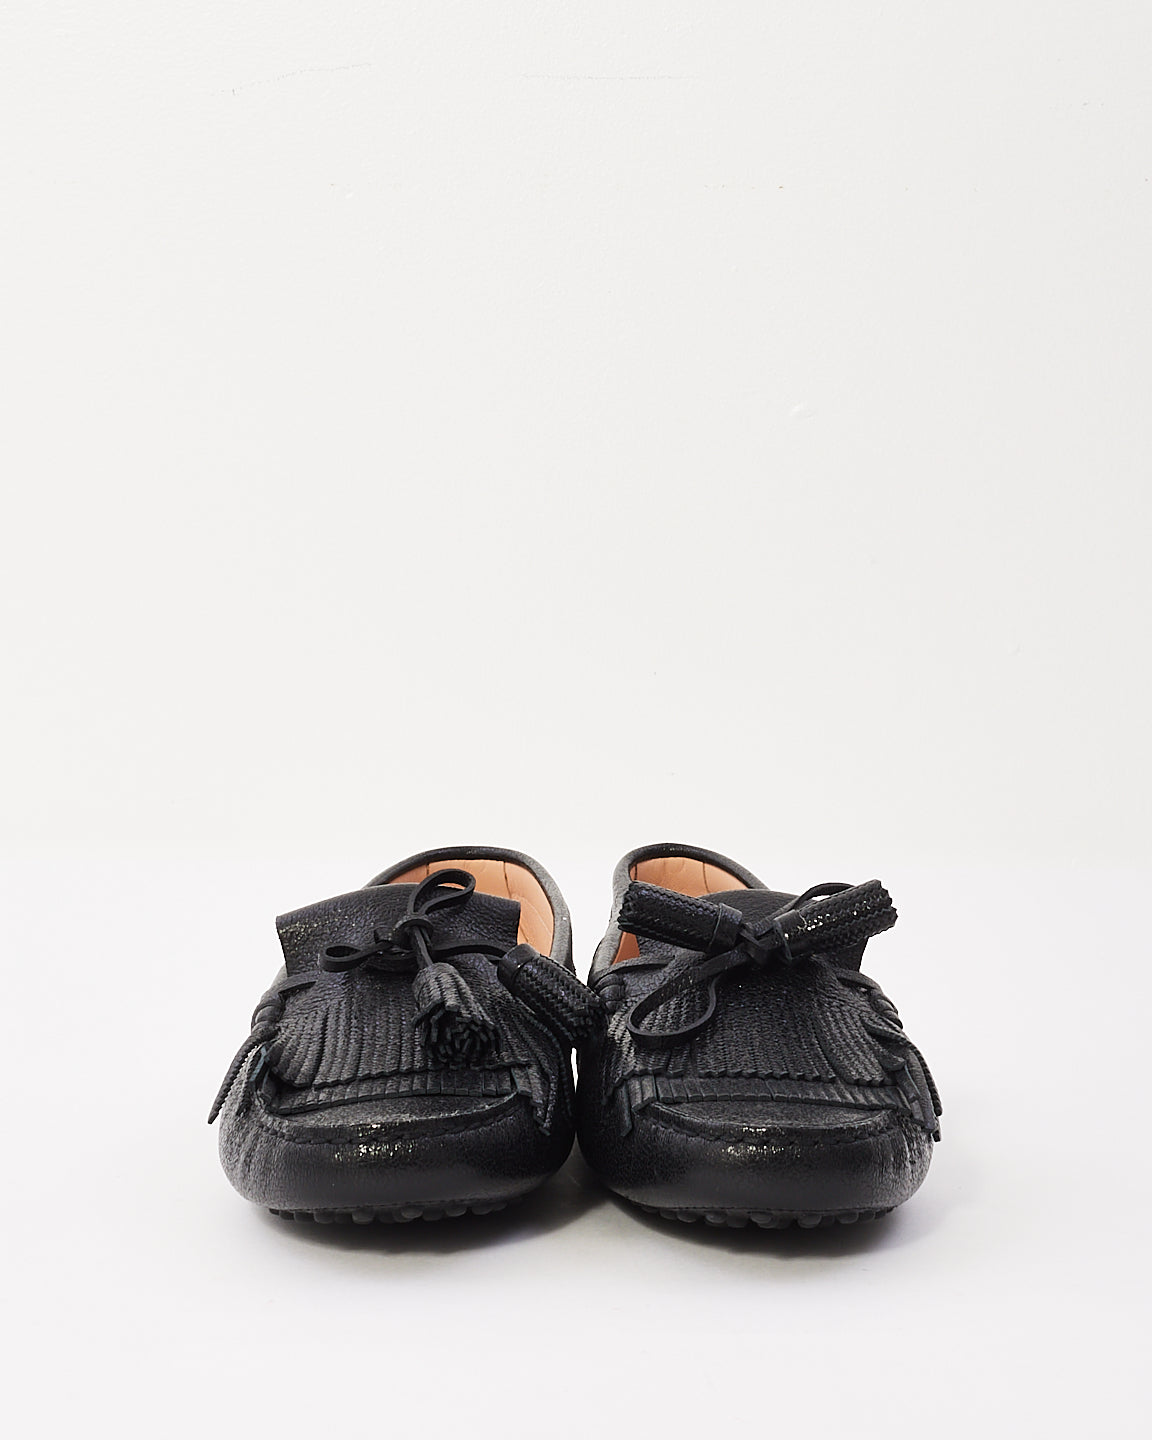 Tods Black Leather Fringe Loafers - 39